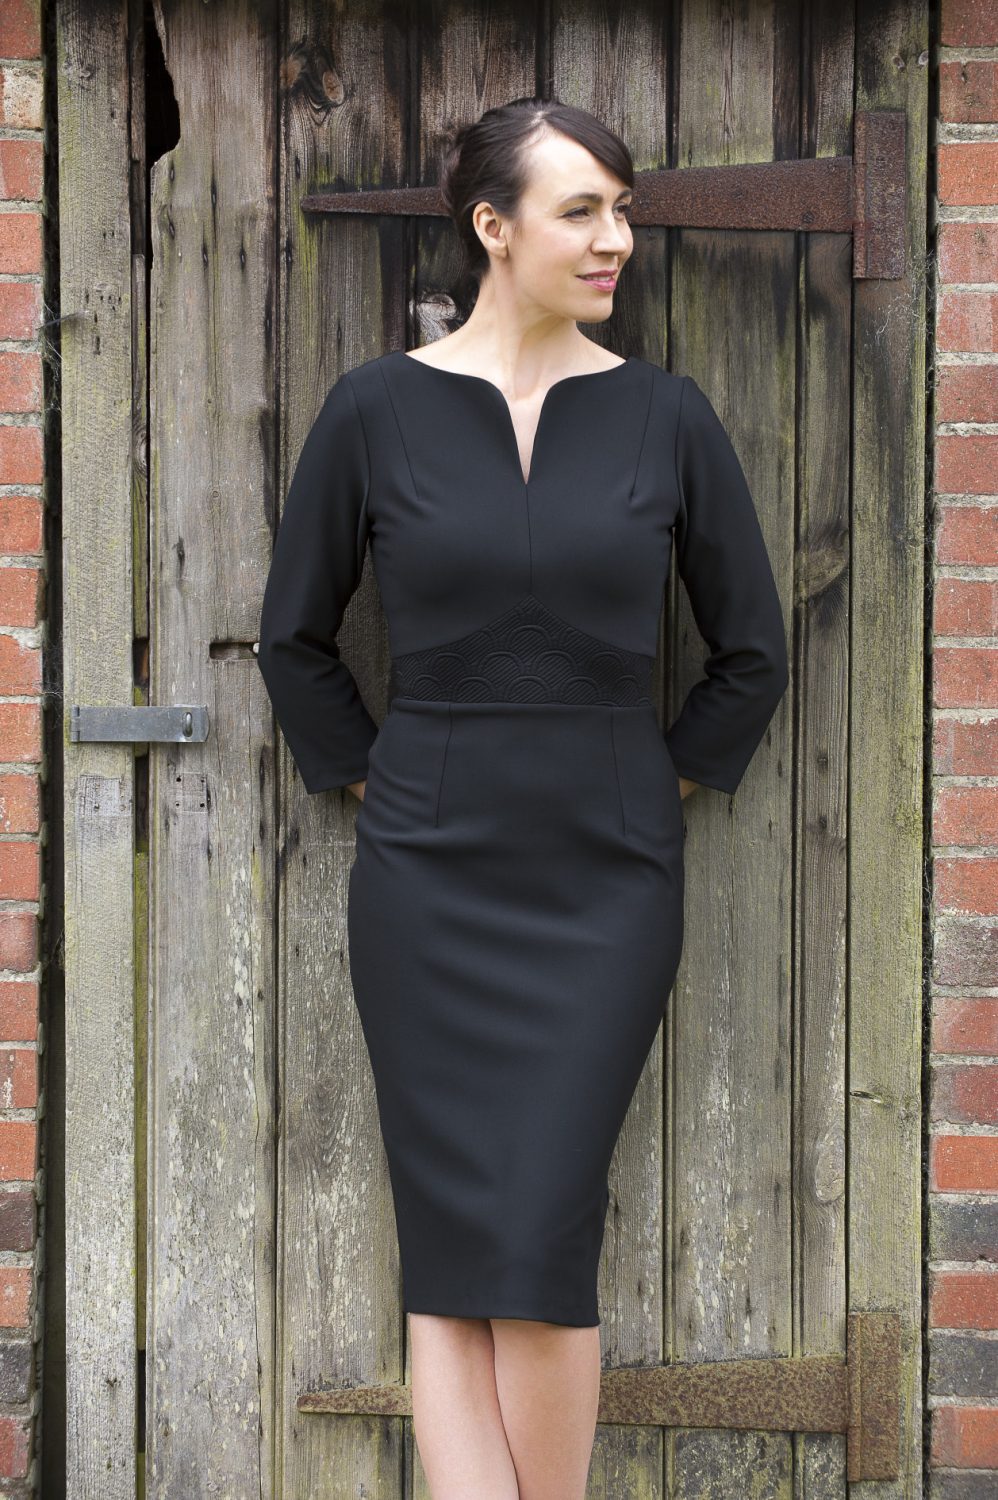 Diva black dress, £115, Odyl, Cranbrook 01580 714907 www.odyl.co.uk